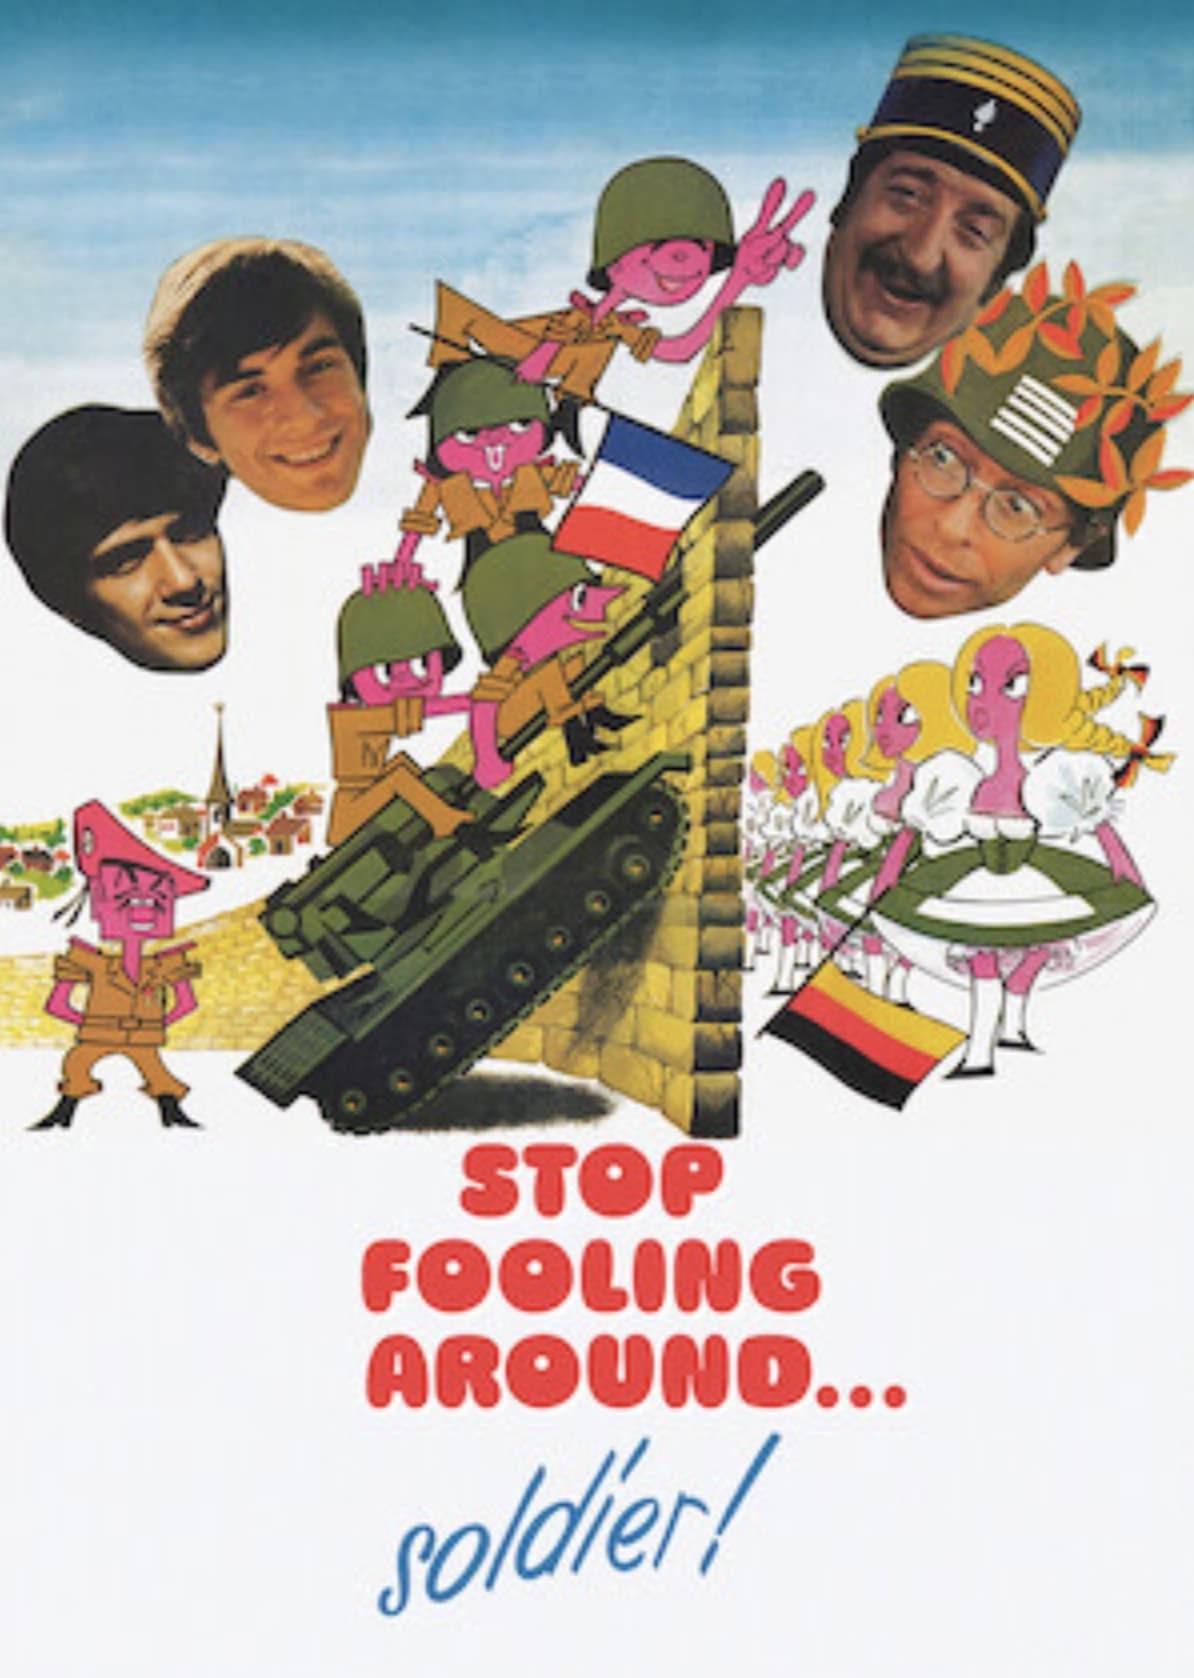 Stop Fooling Around... Soldier! (1977)